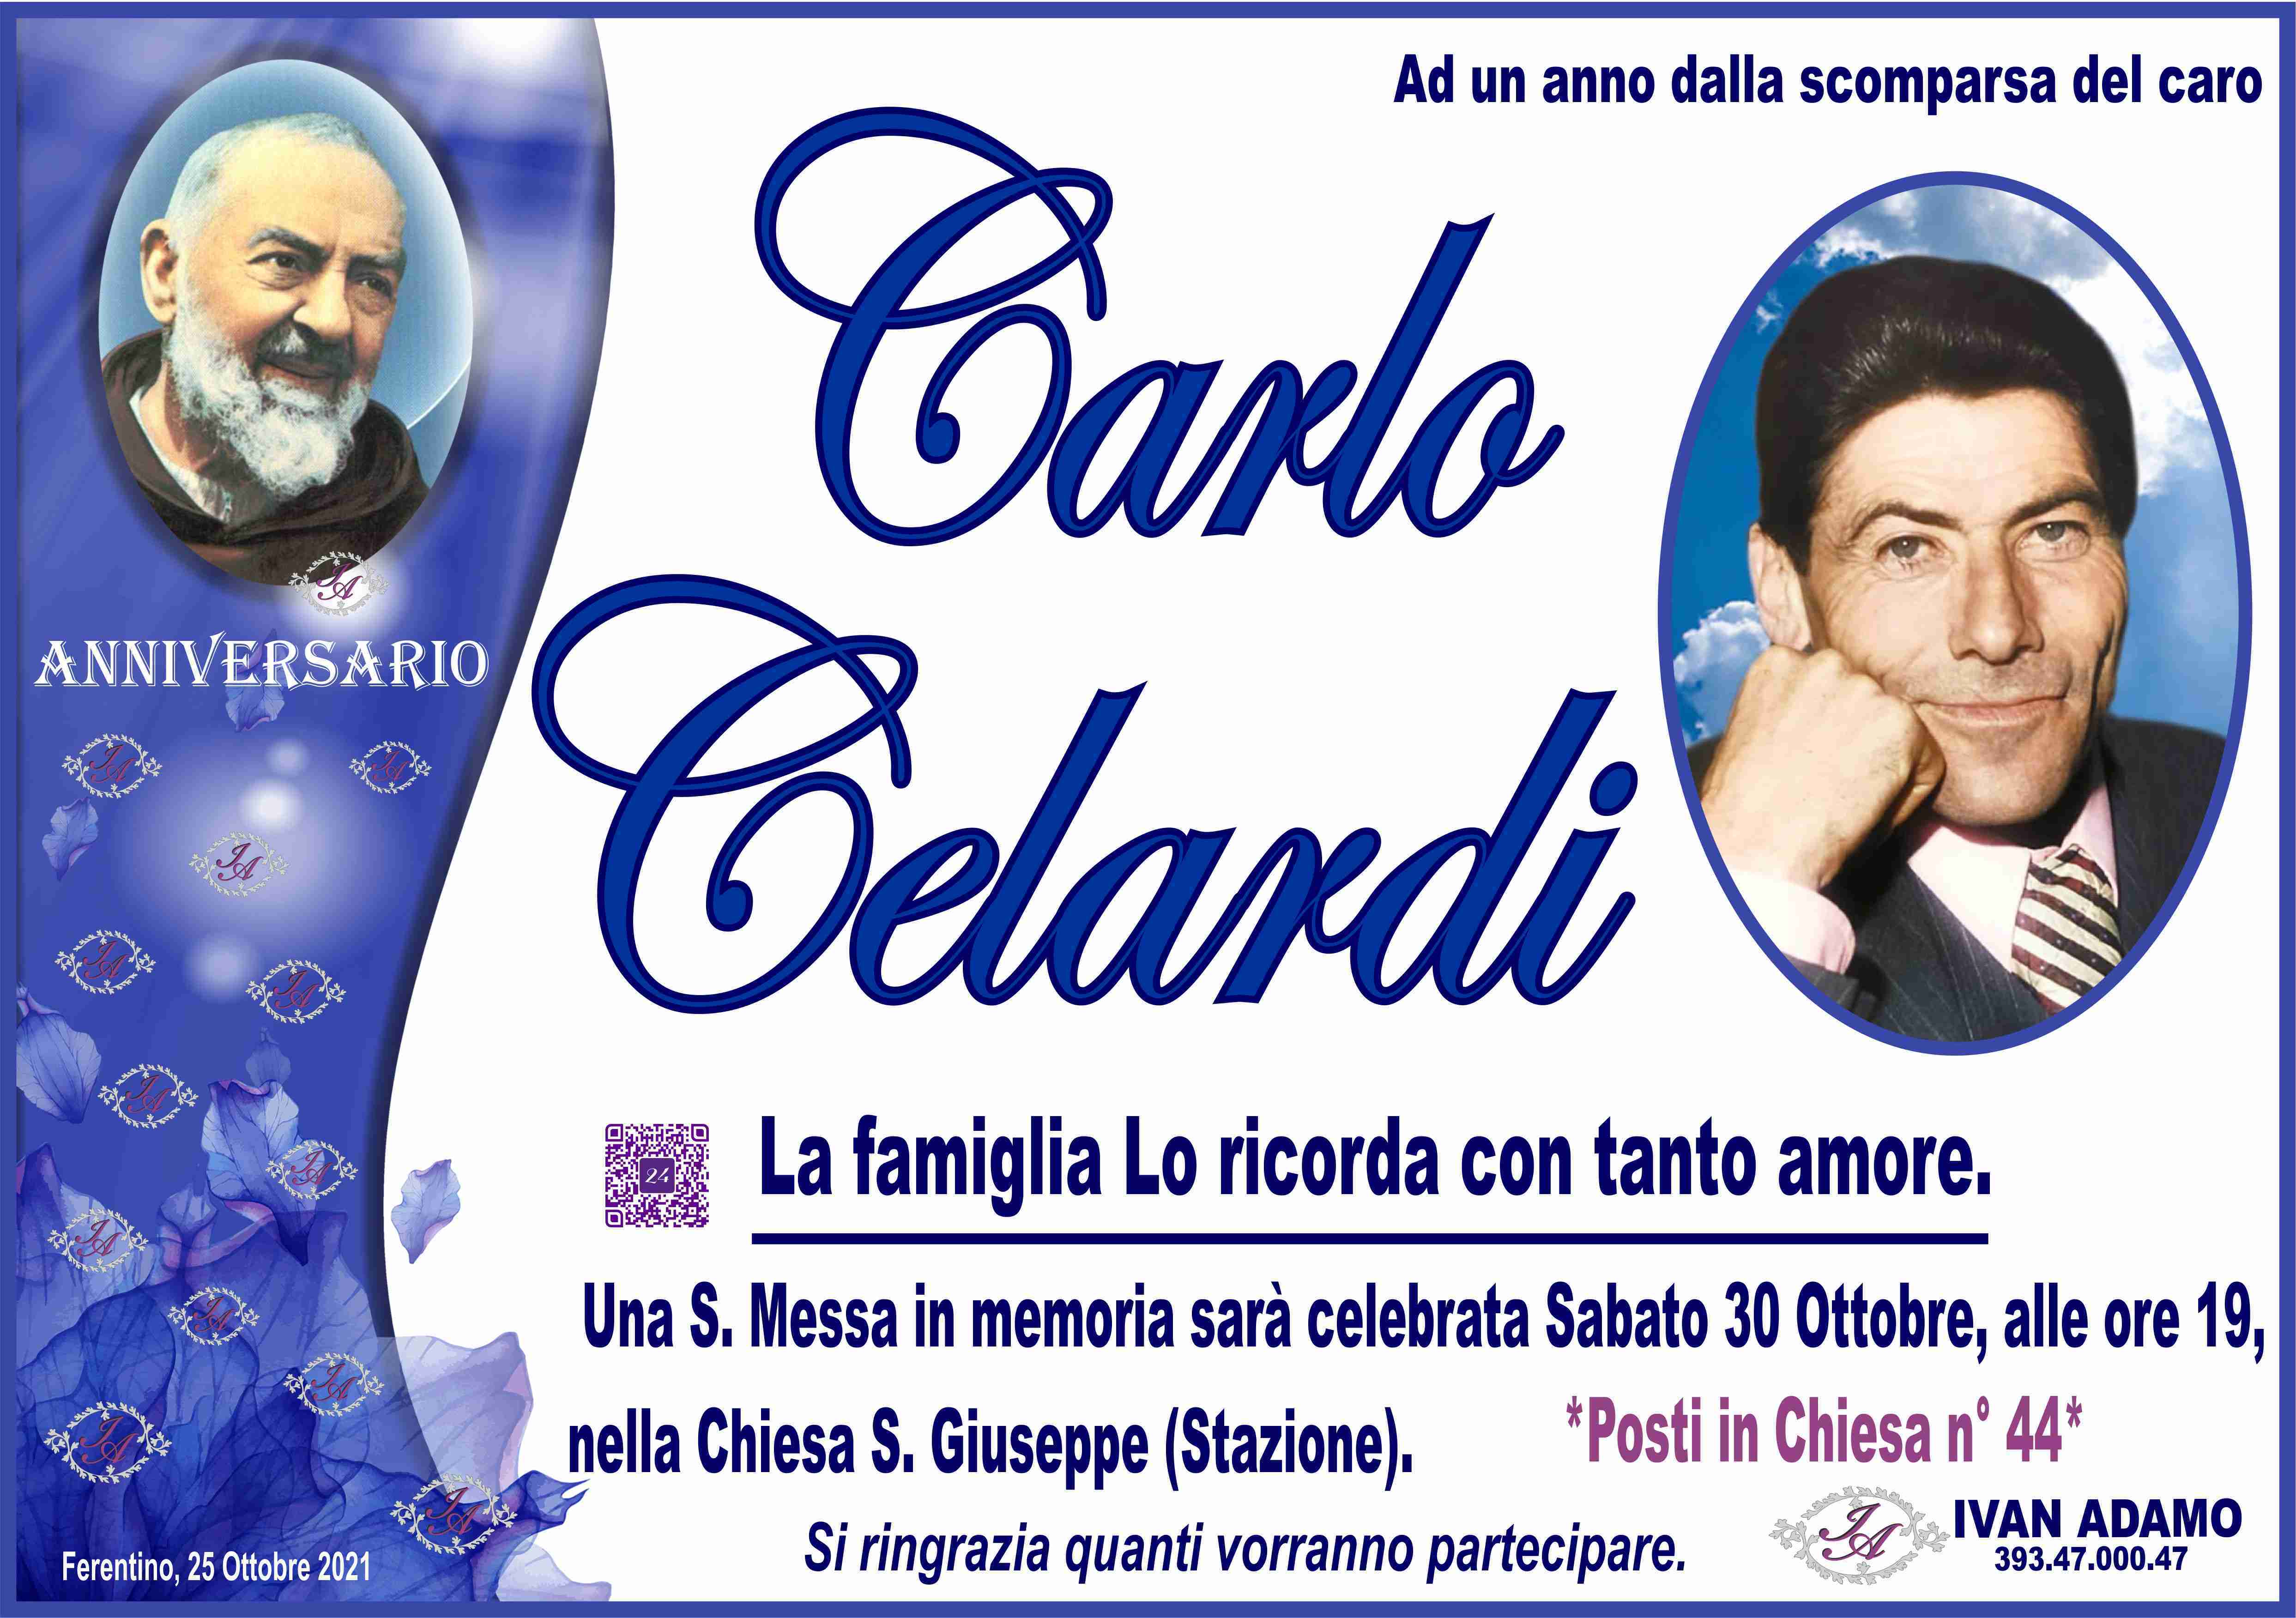 Carlo Celardi